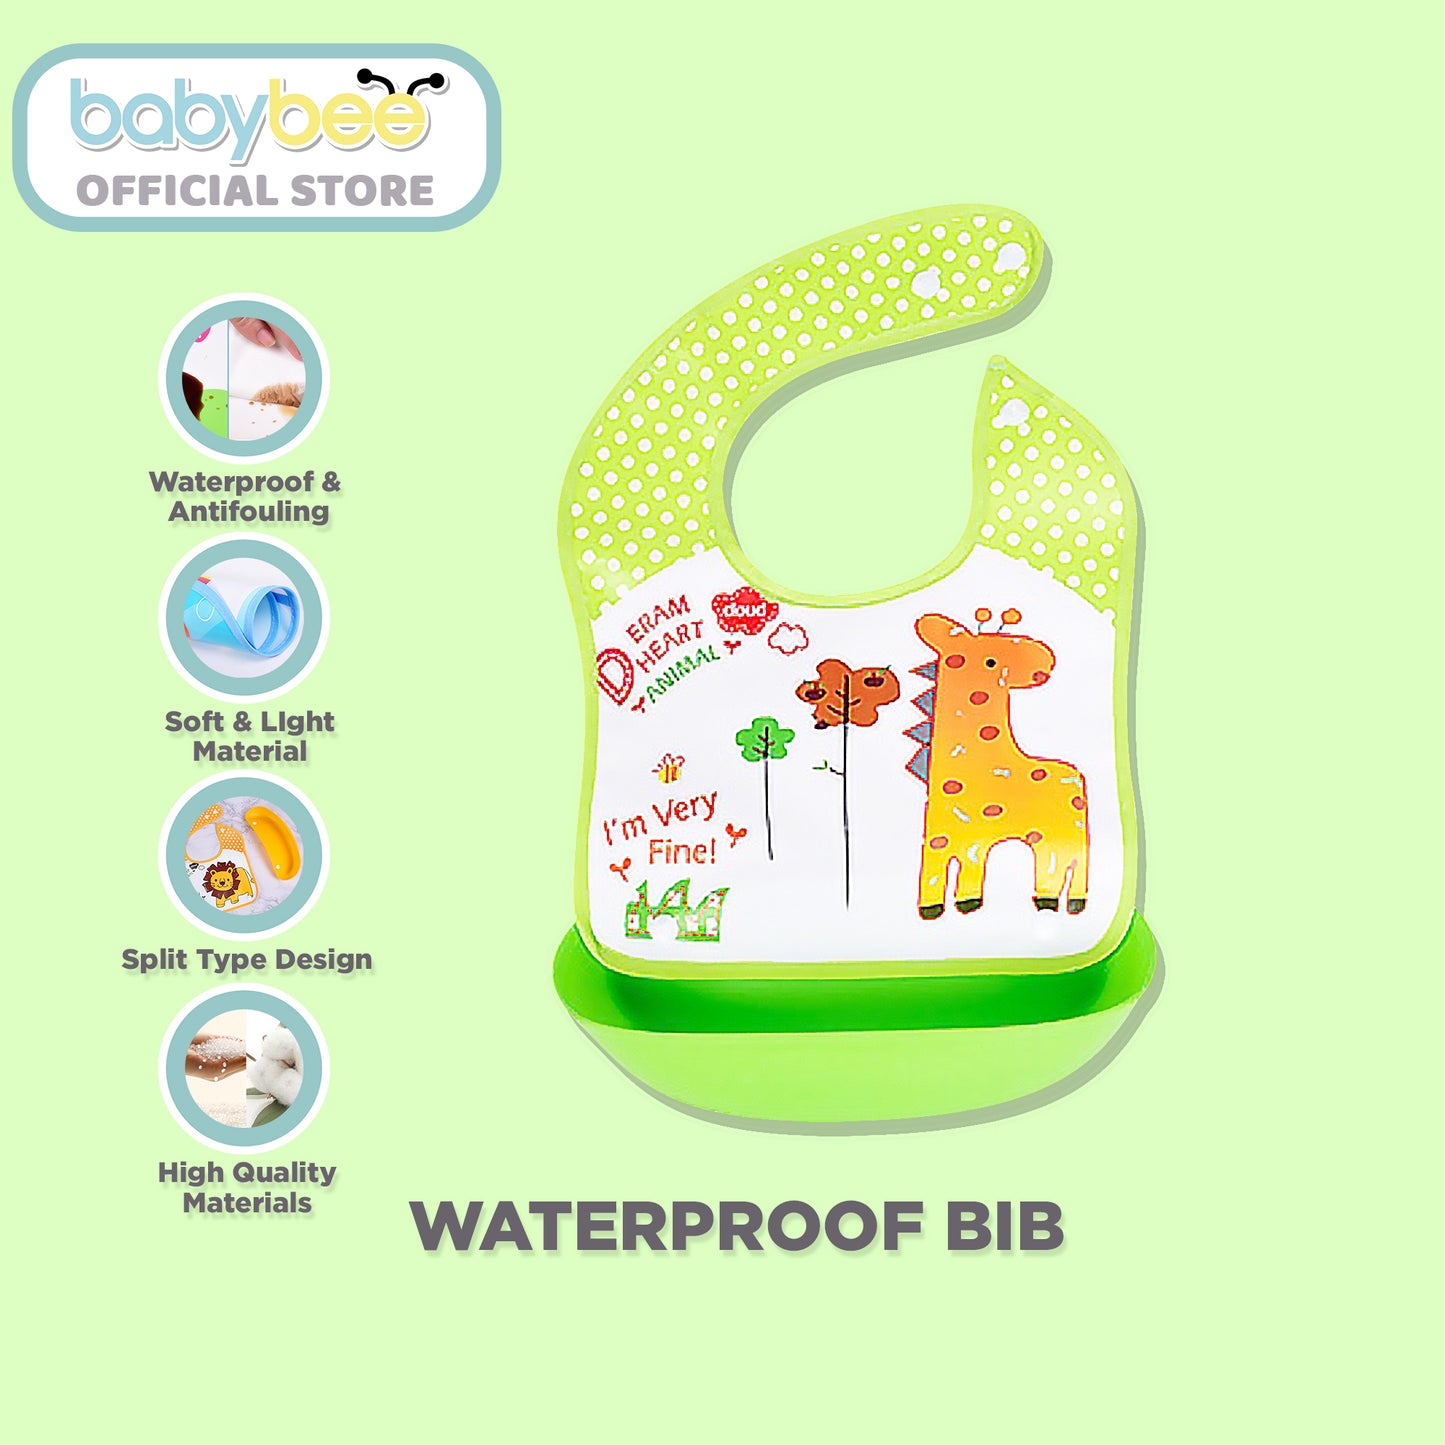 Babybee Waterproof Bib - Green